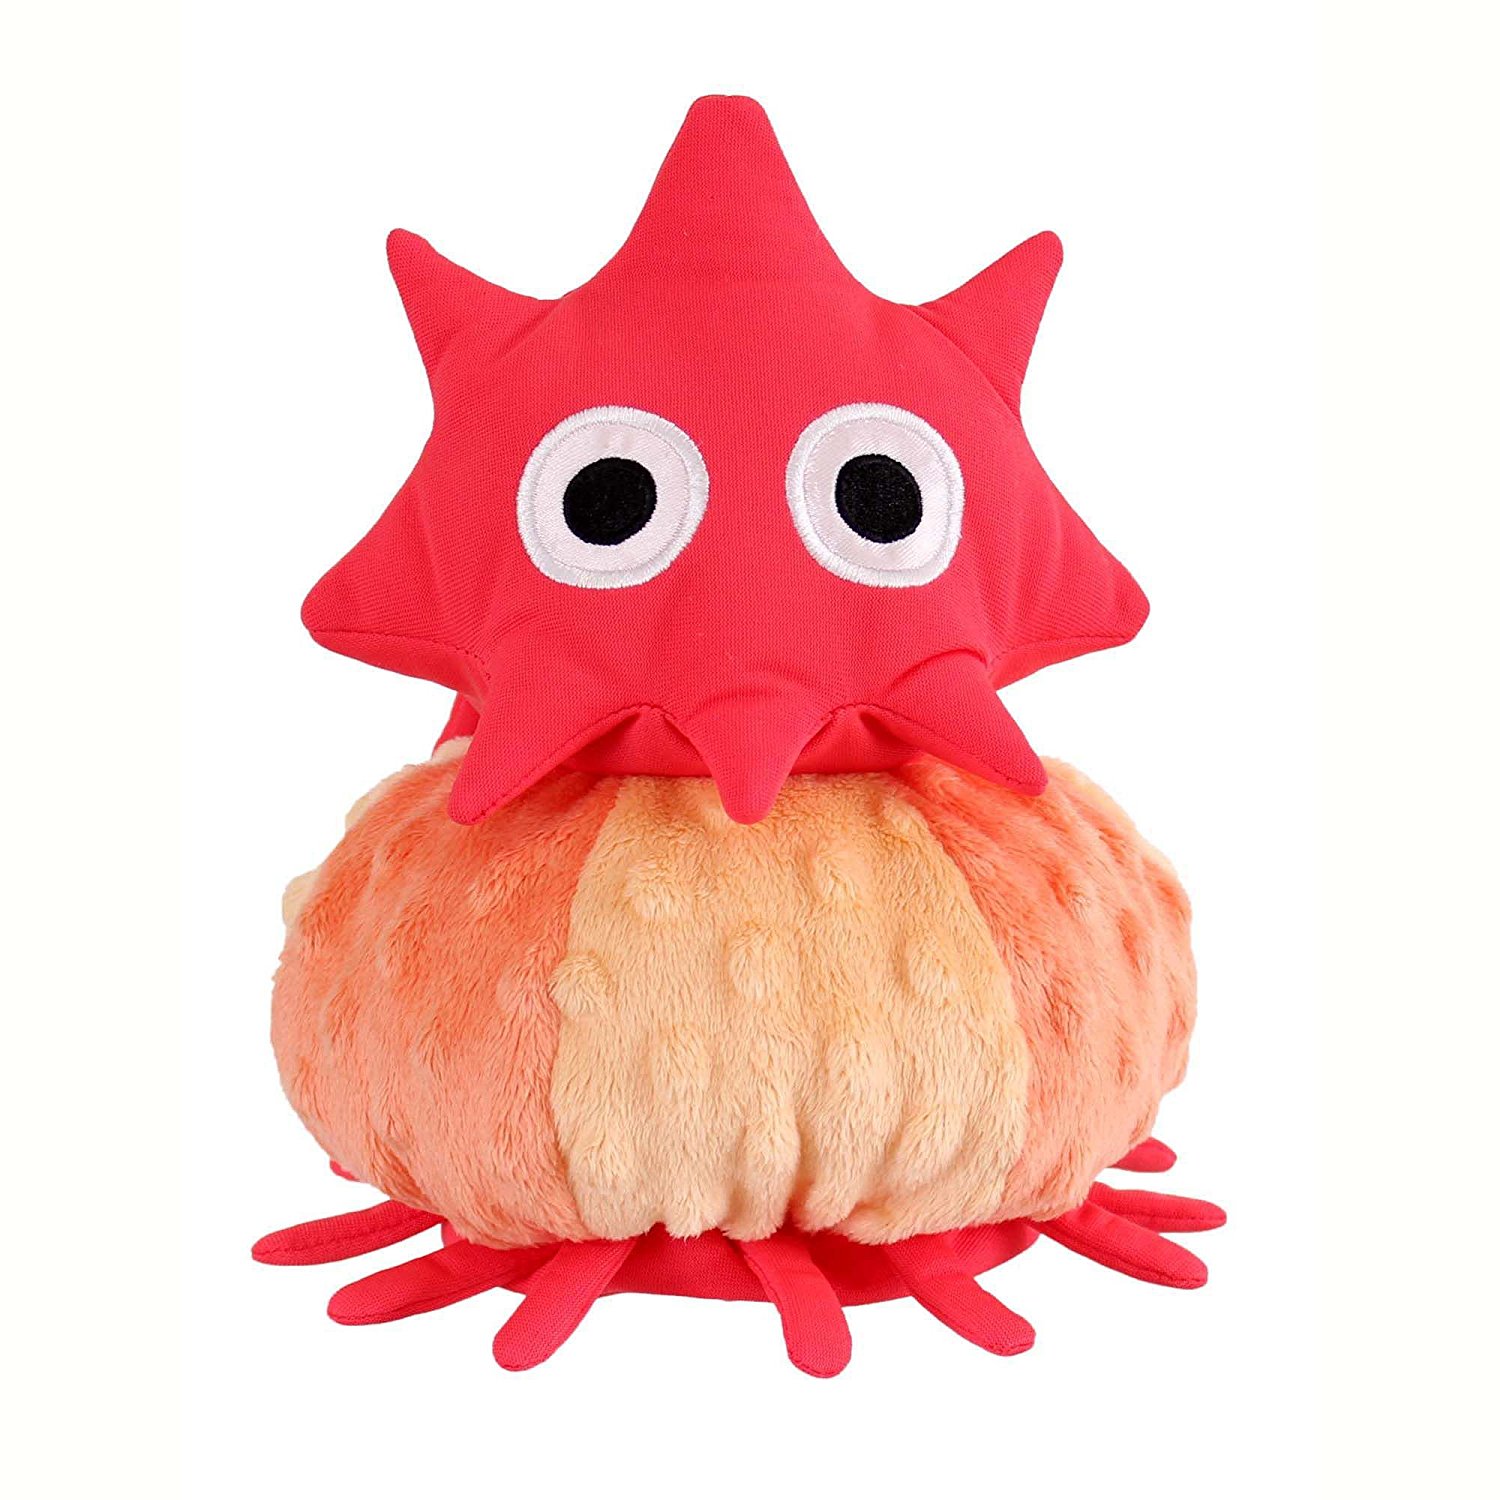 Amazon.com: Twirly Woos Peeking Peekaboo Soft Toy by Twirlywoos ...